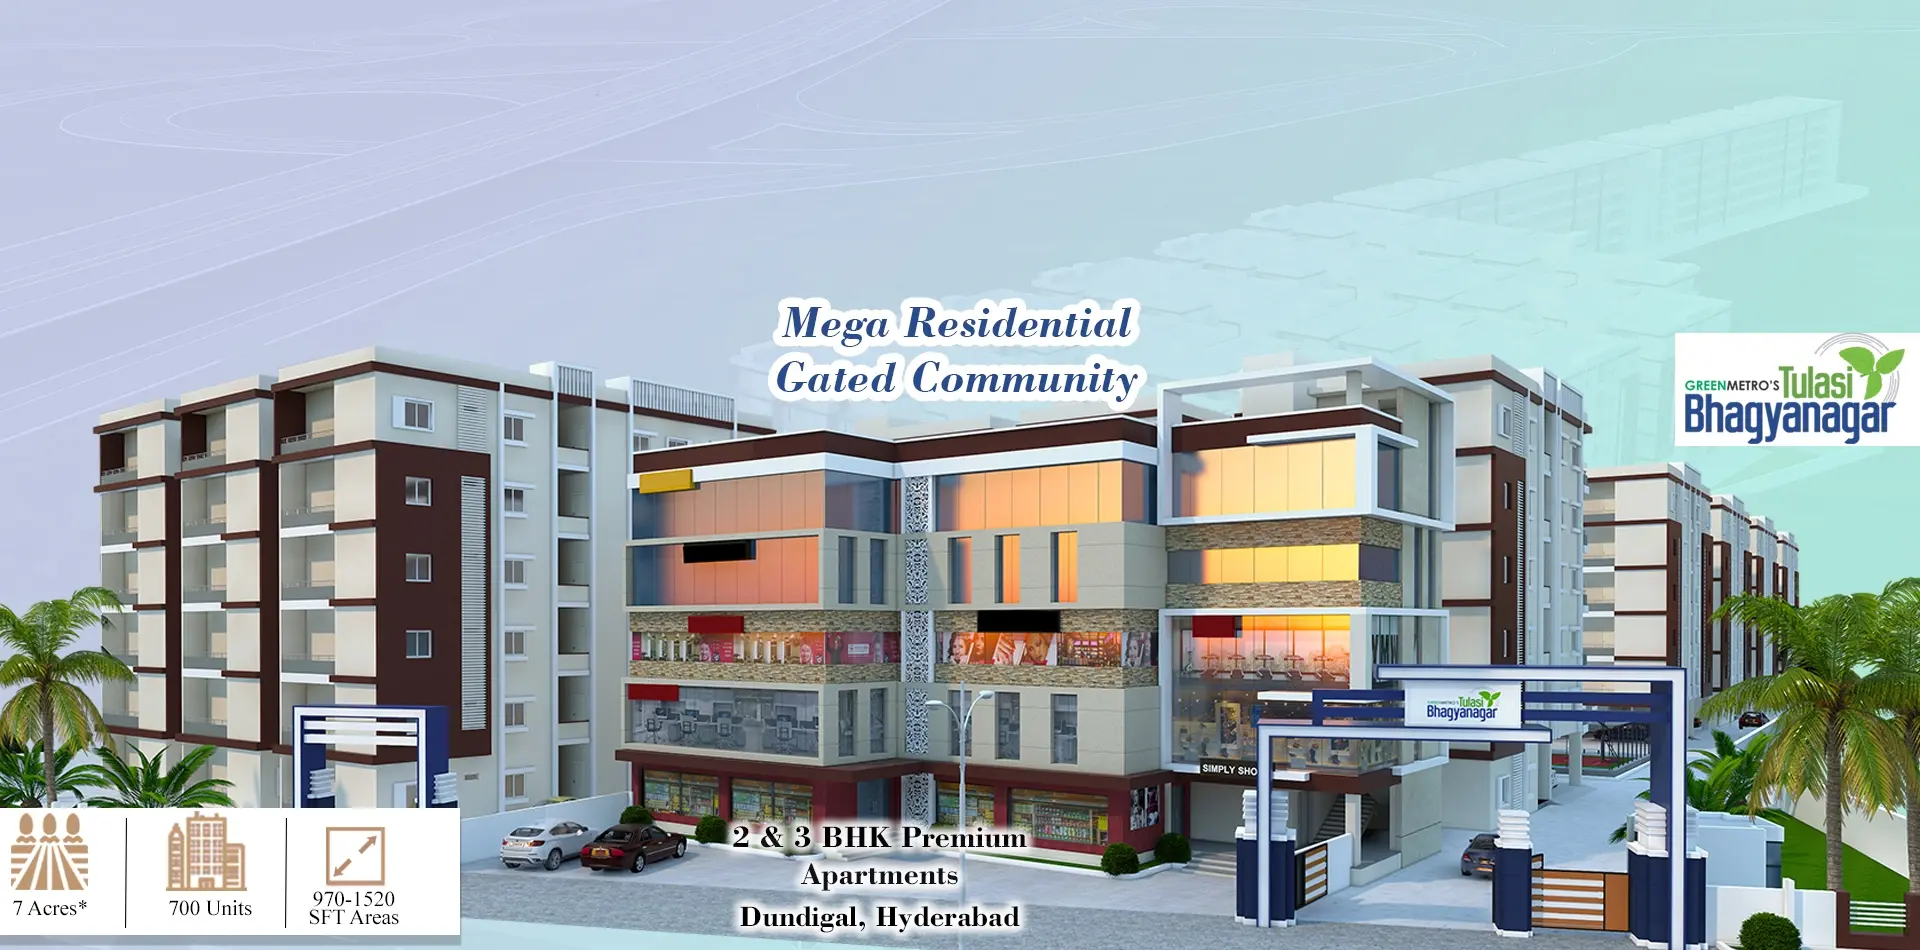 GreenMetro's Tulasi Bhagyaagar, Premium Apartments in Dundigal